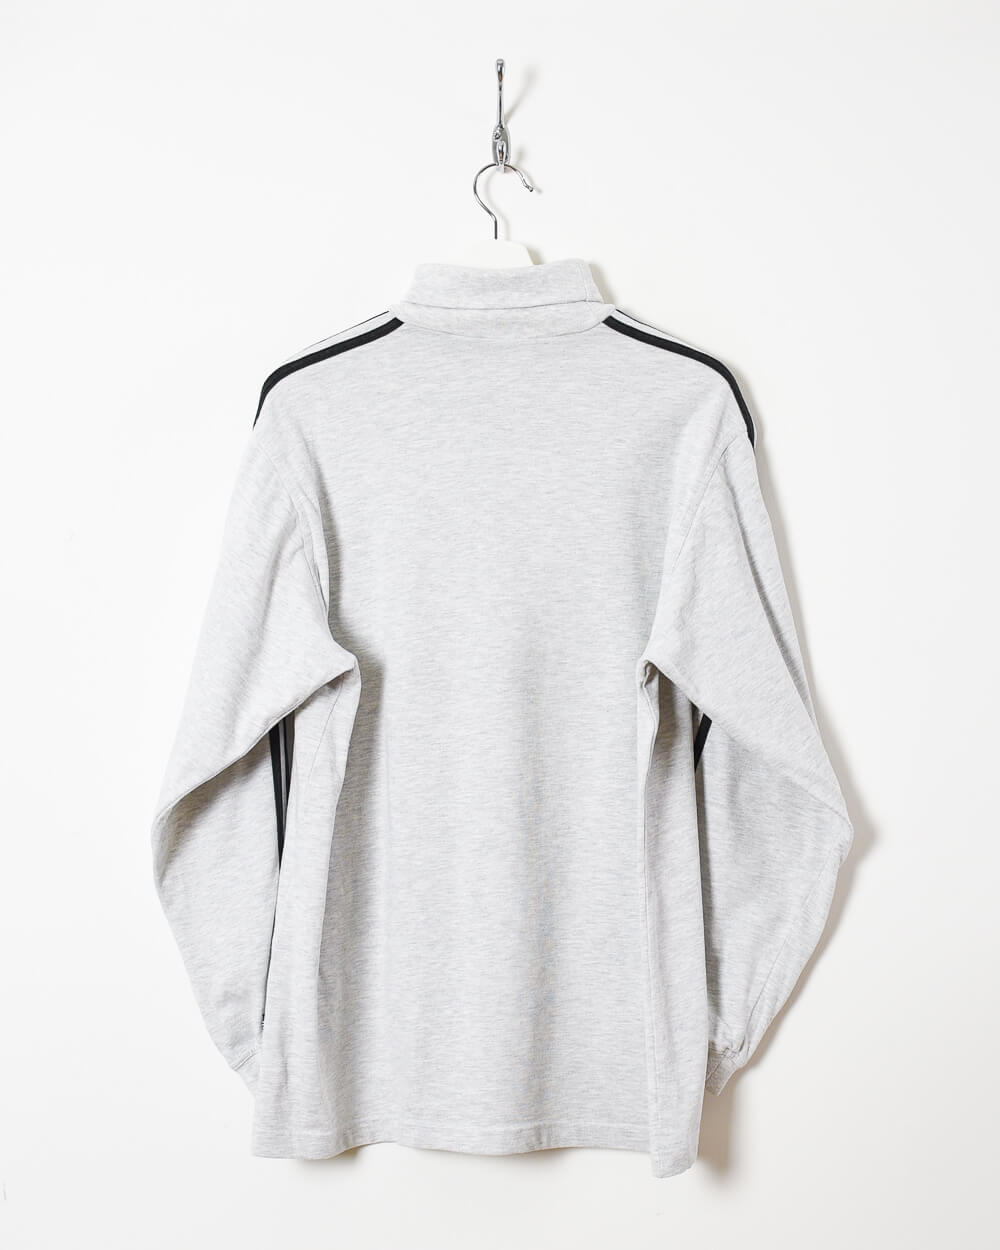 Stone Adidas Turtle Neck Sweatshirt - Medium